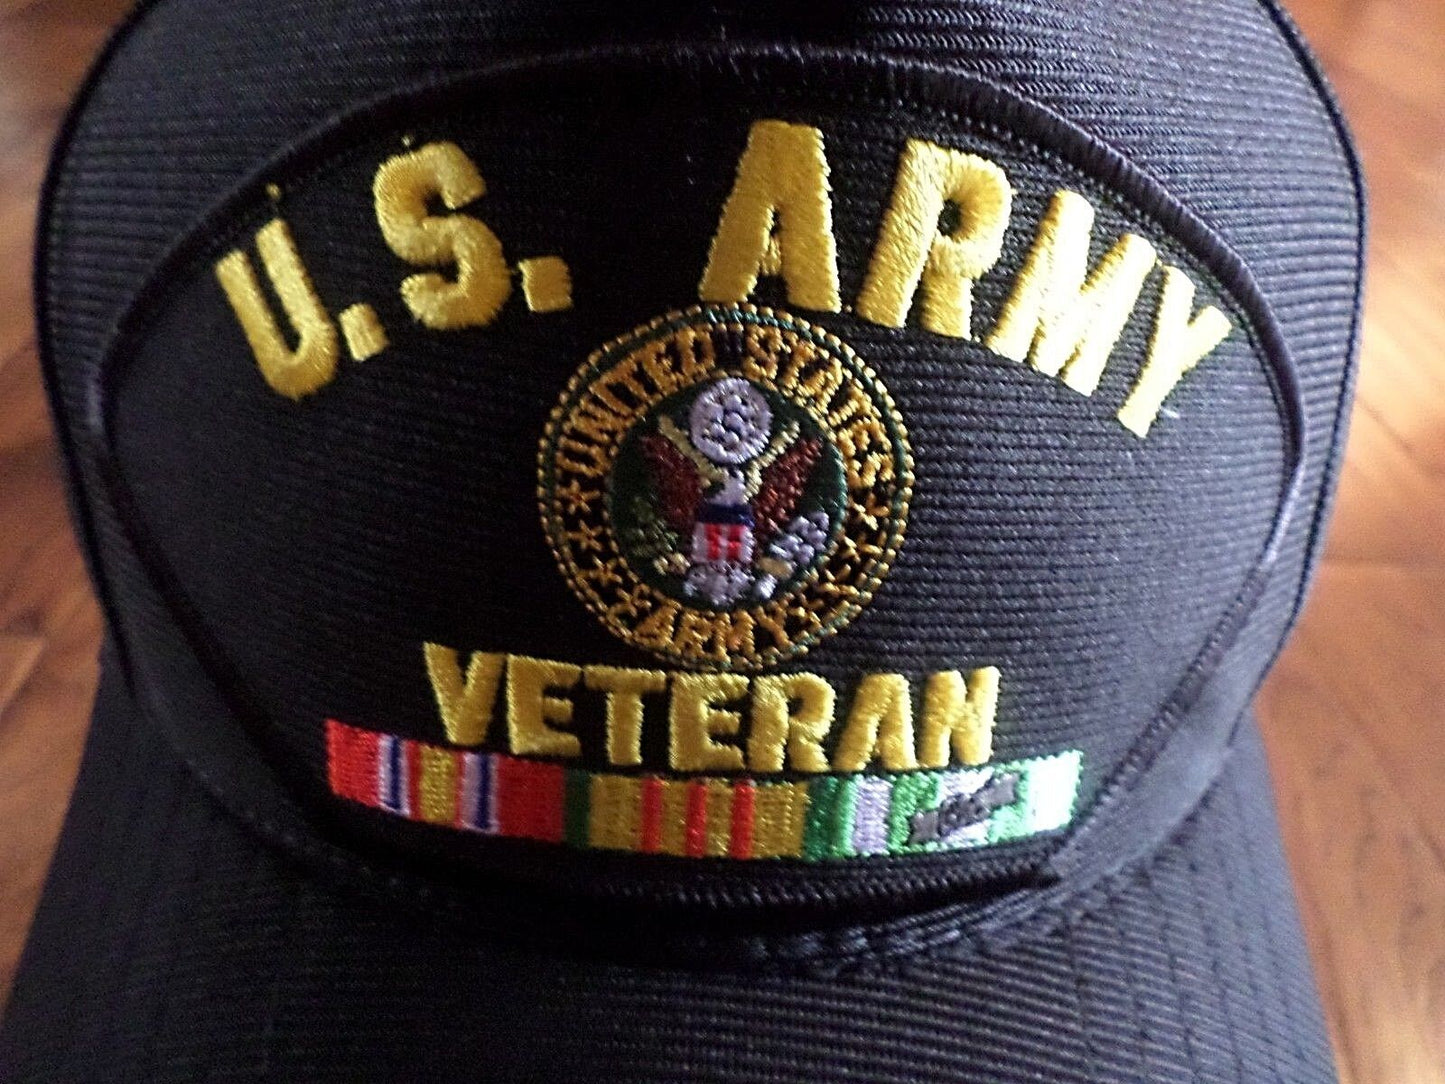 U.S MILITARY ARMY VIETNAM VETERAN HAT OFFICIAL ARMY BALL CAP U.S.A. MADE